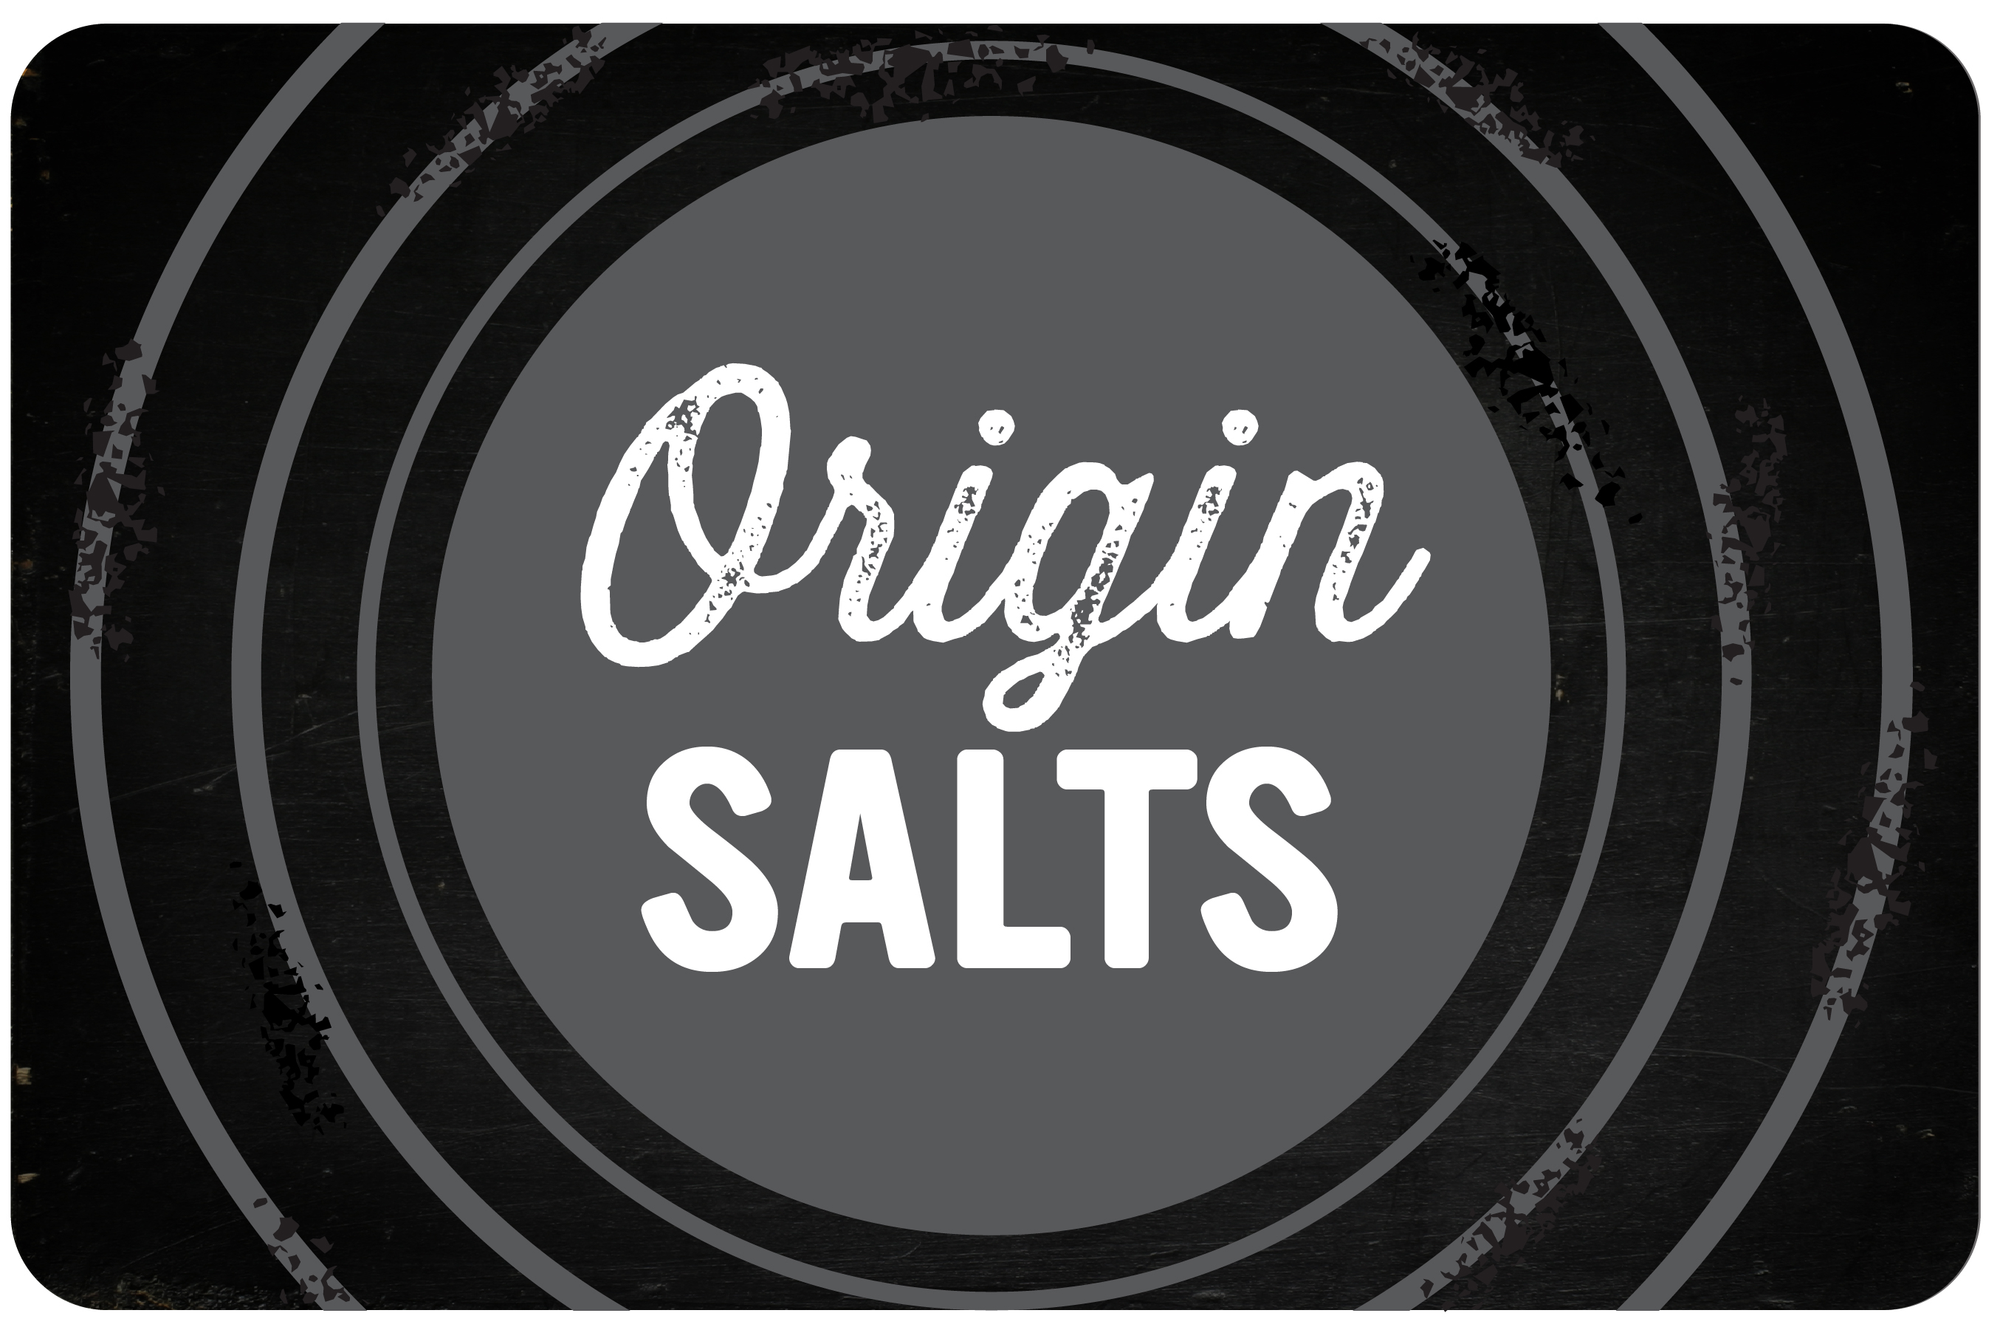 Origin Salts